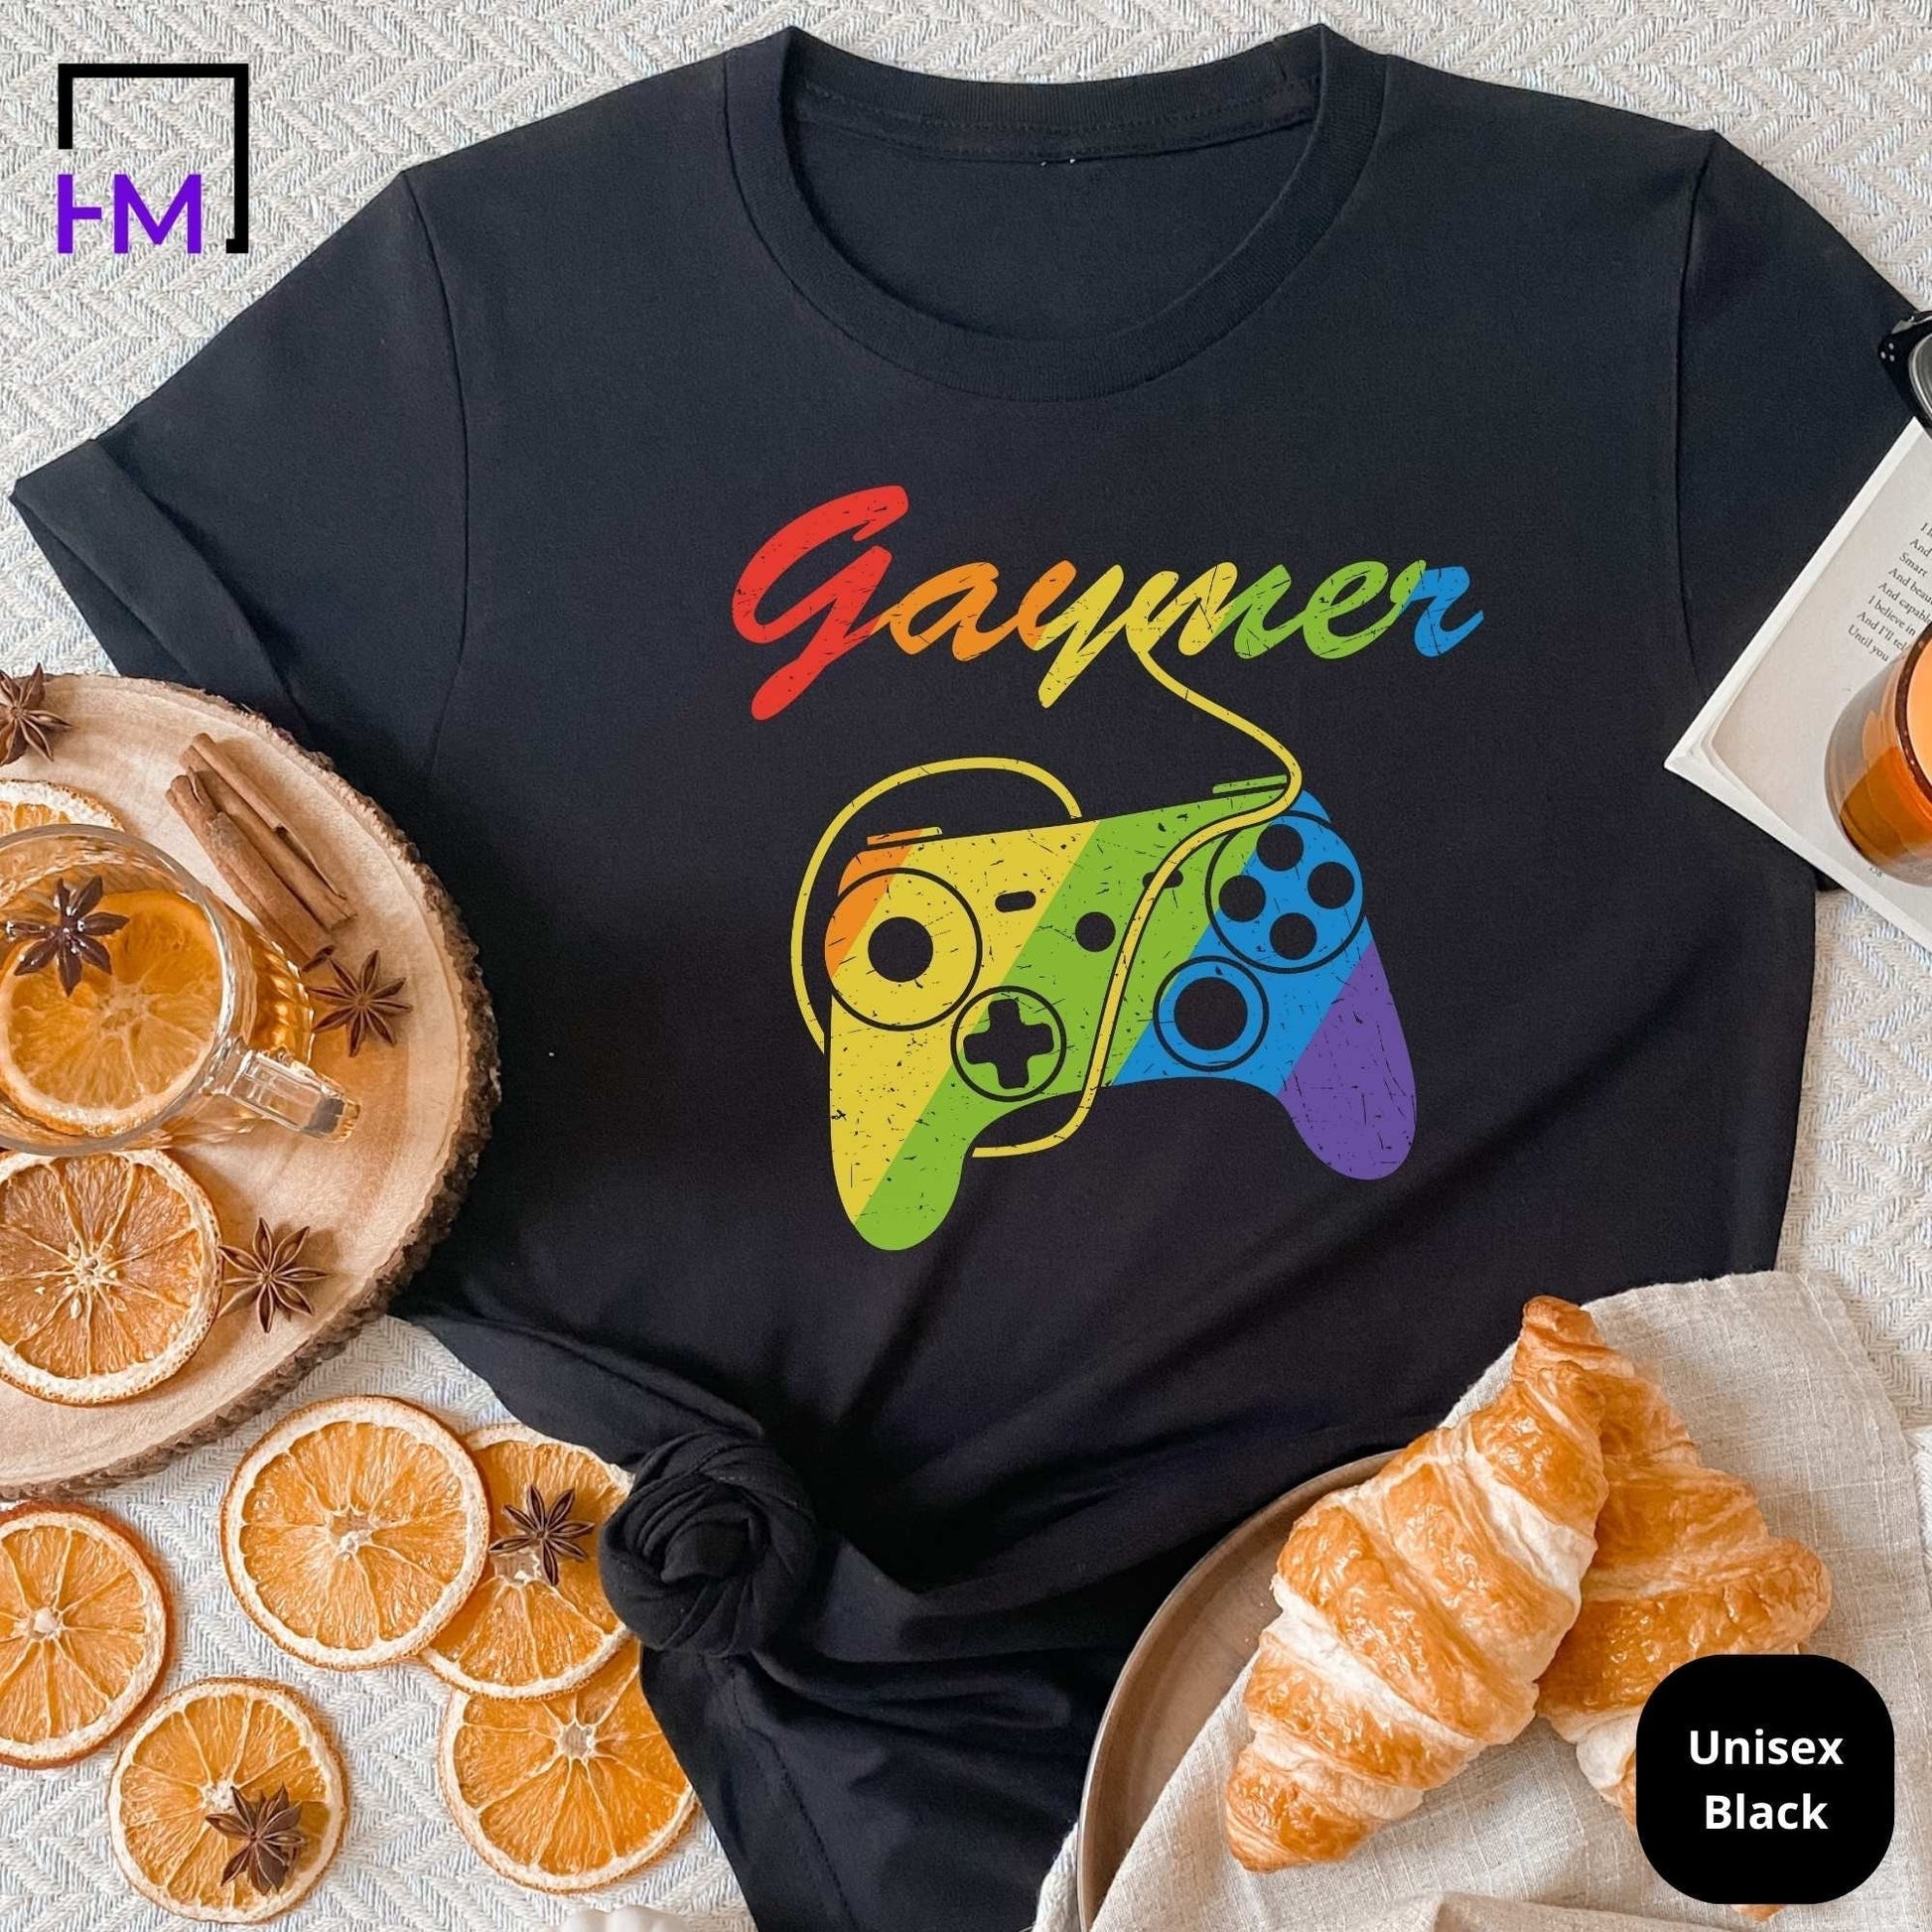 Pride Shirt, Gamer Rainbow, Human Rights Love is Love Shirt, Retro Hippie Shirt, Equality T-Shirt, LGBTQ Support Shirts, LGBTQ Pride Shirts